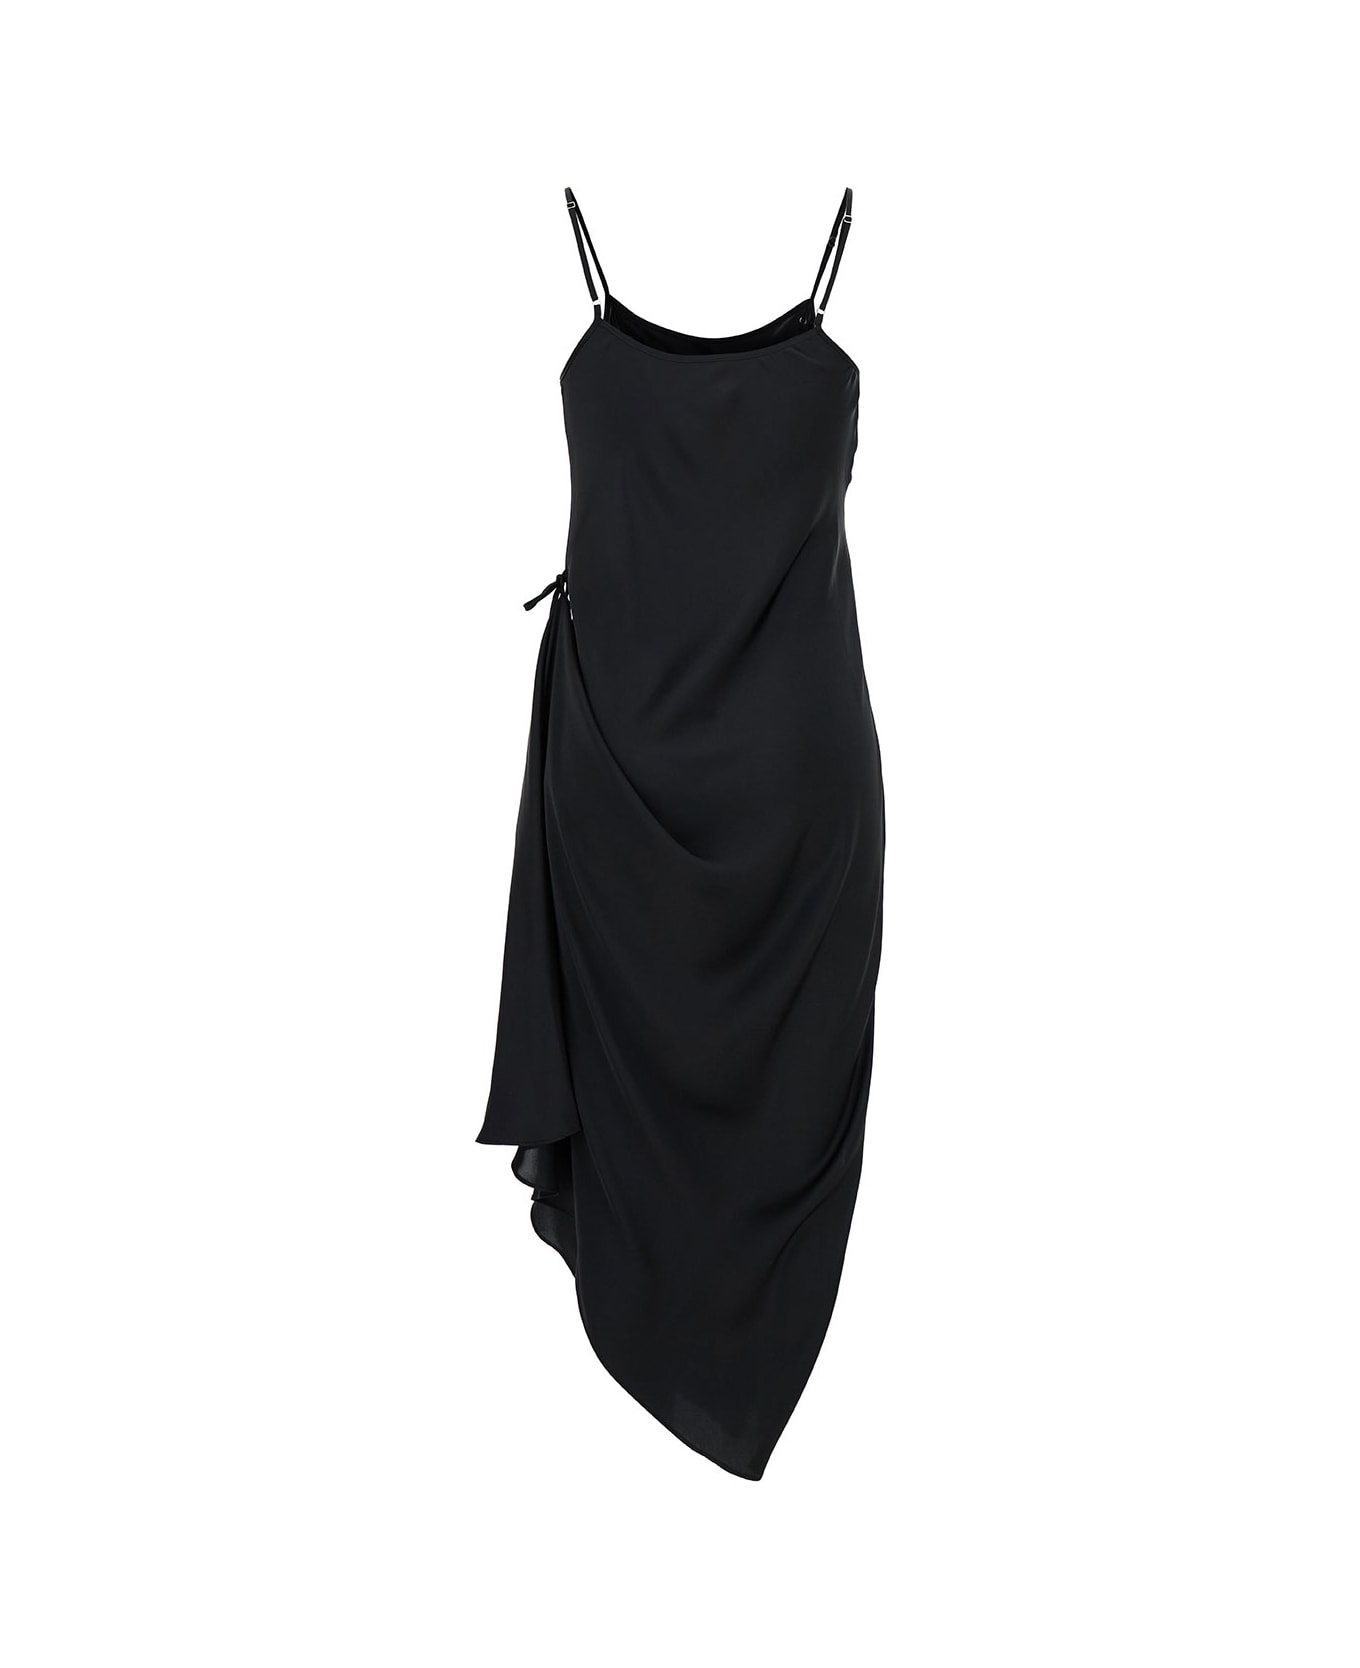 Low Classic Black Midi Slip Dress With Drawstring In Light-weight Fabric Woman - Black